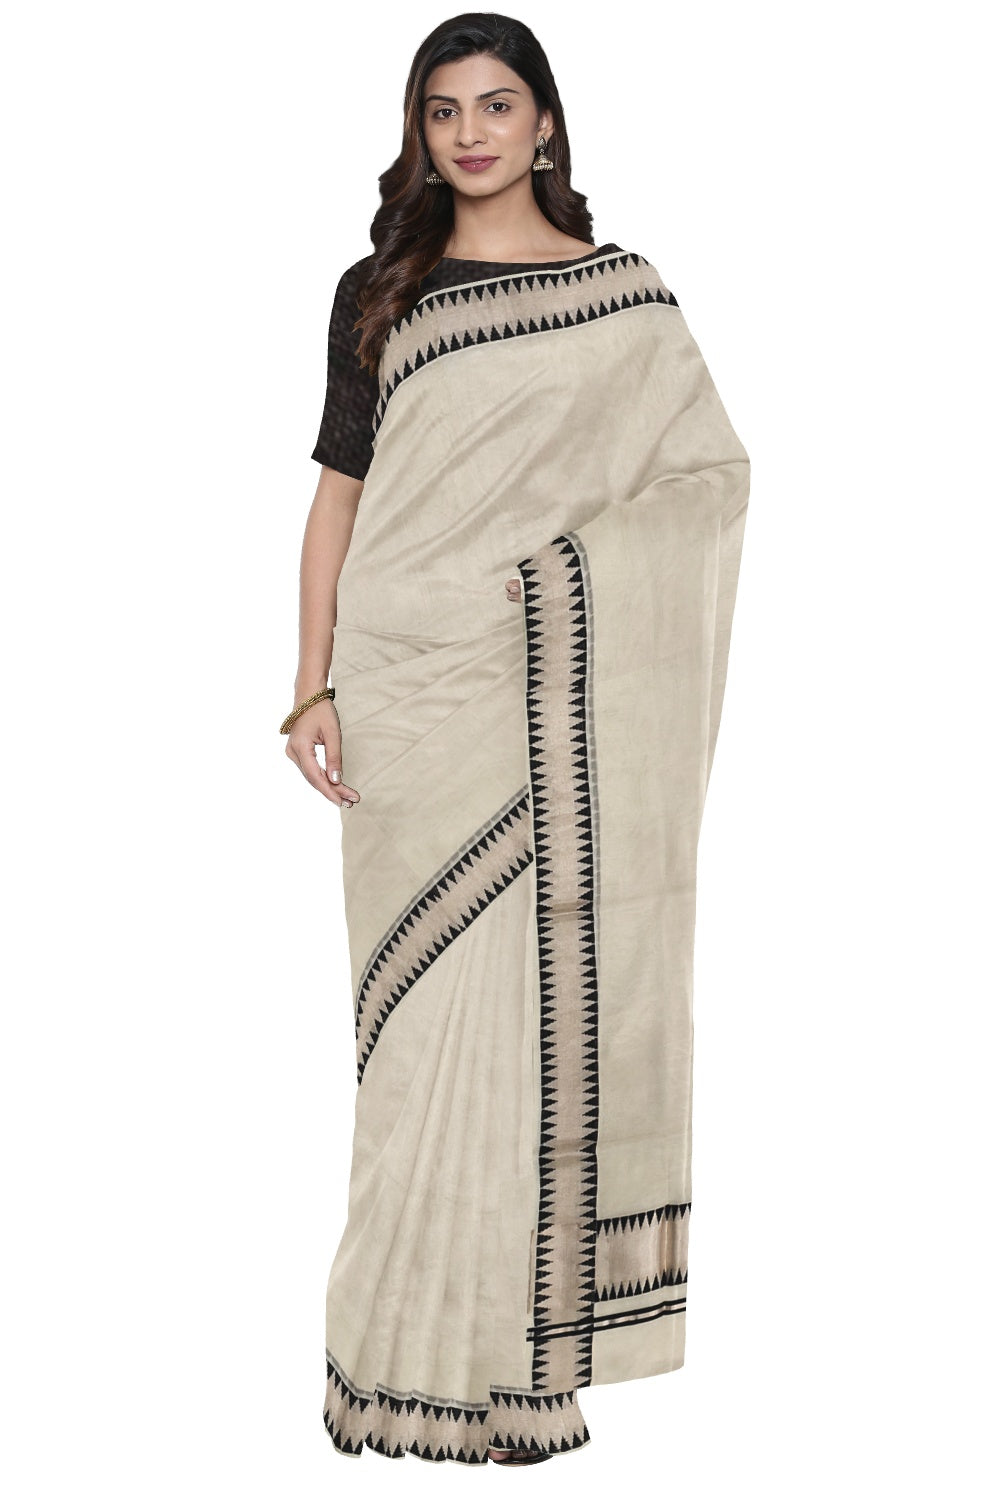 Southloom™ Handloom Silver Kasavu Saree with Black Temple Border